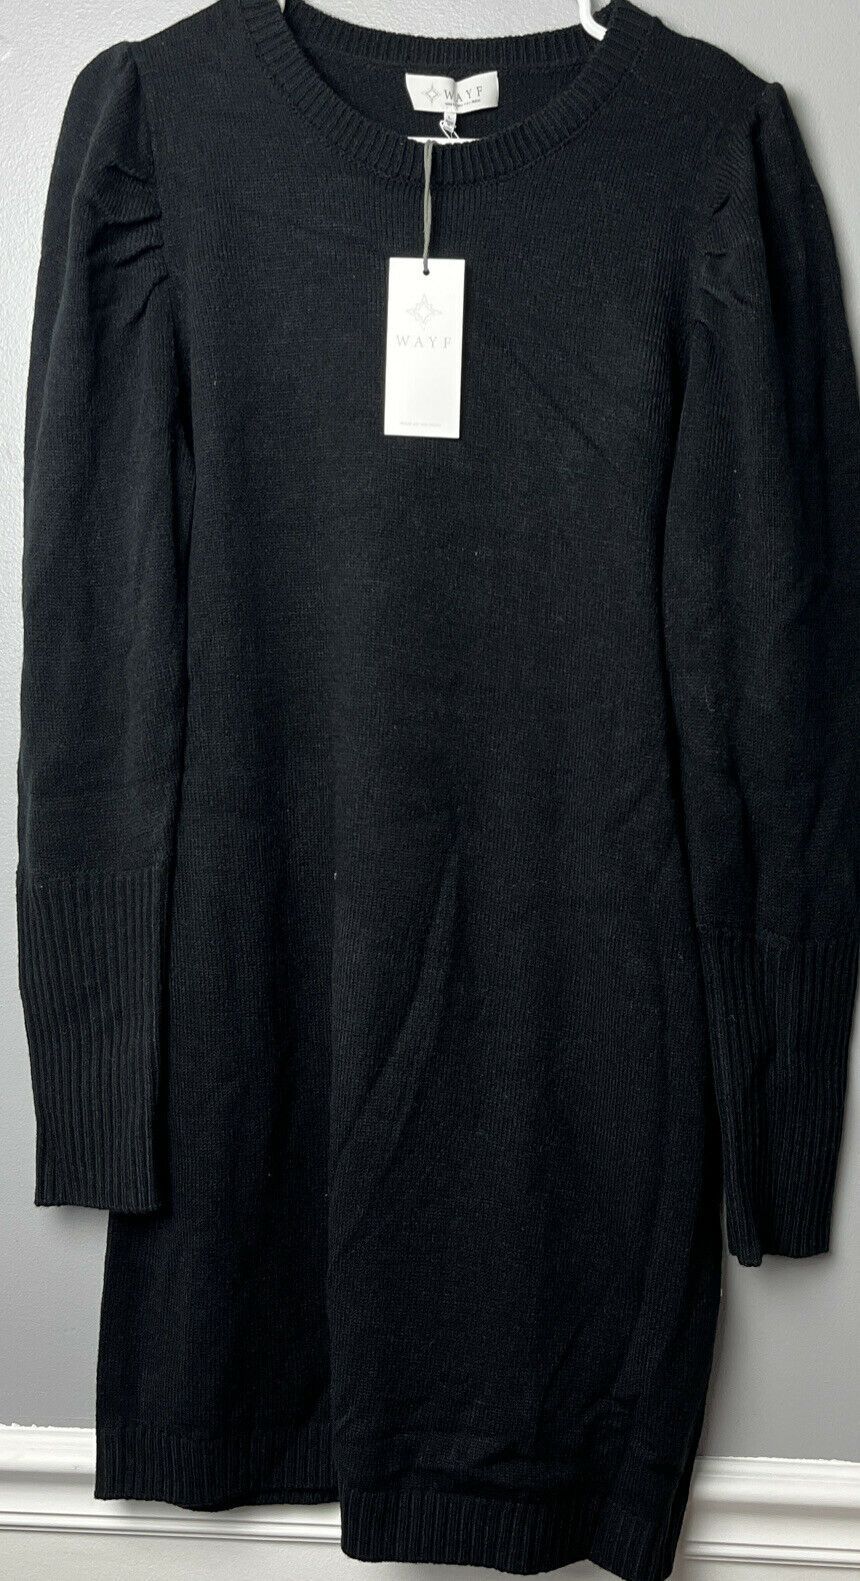 WAYF X Influencers San Francisco Puff Sleeve Sweater Dress Large NWT RN134851